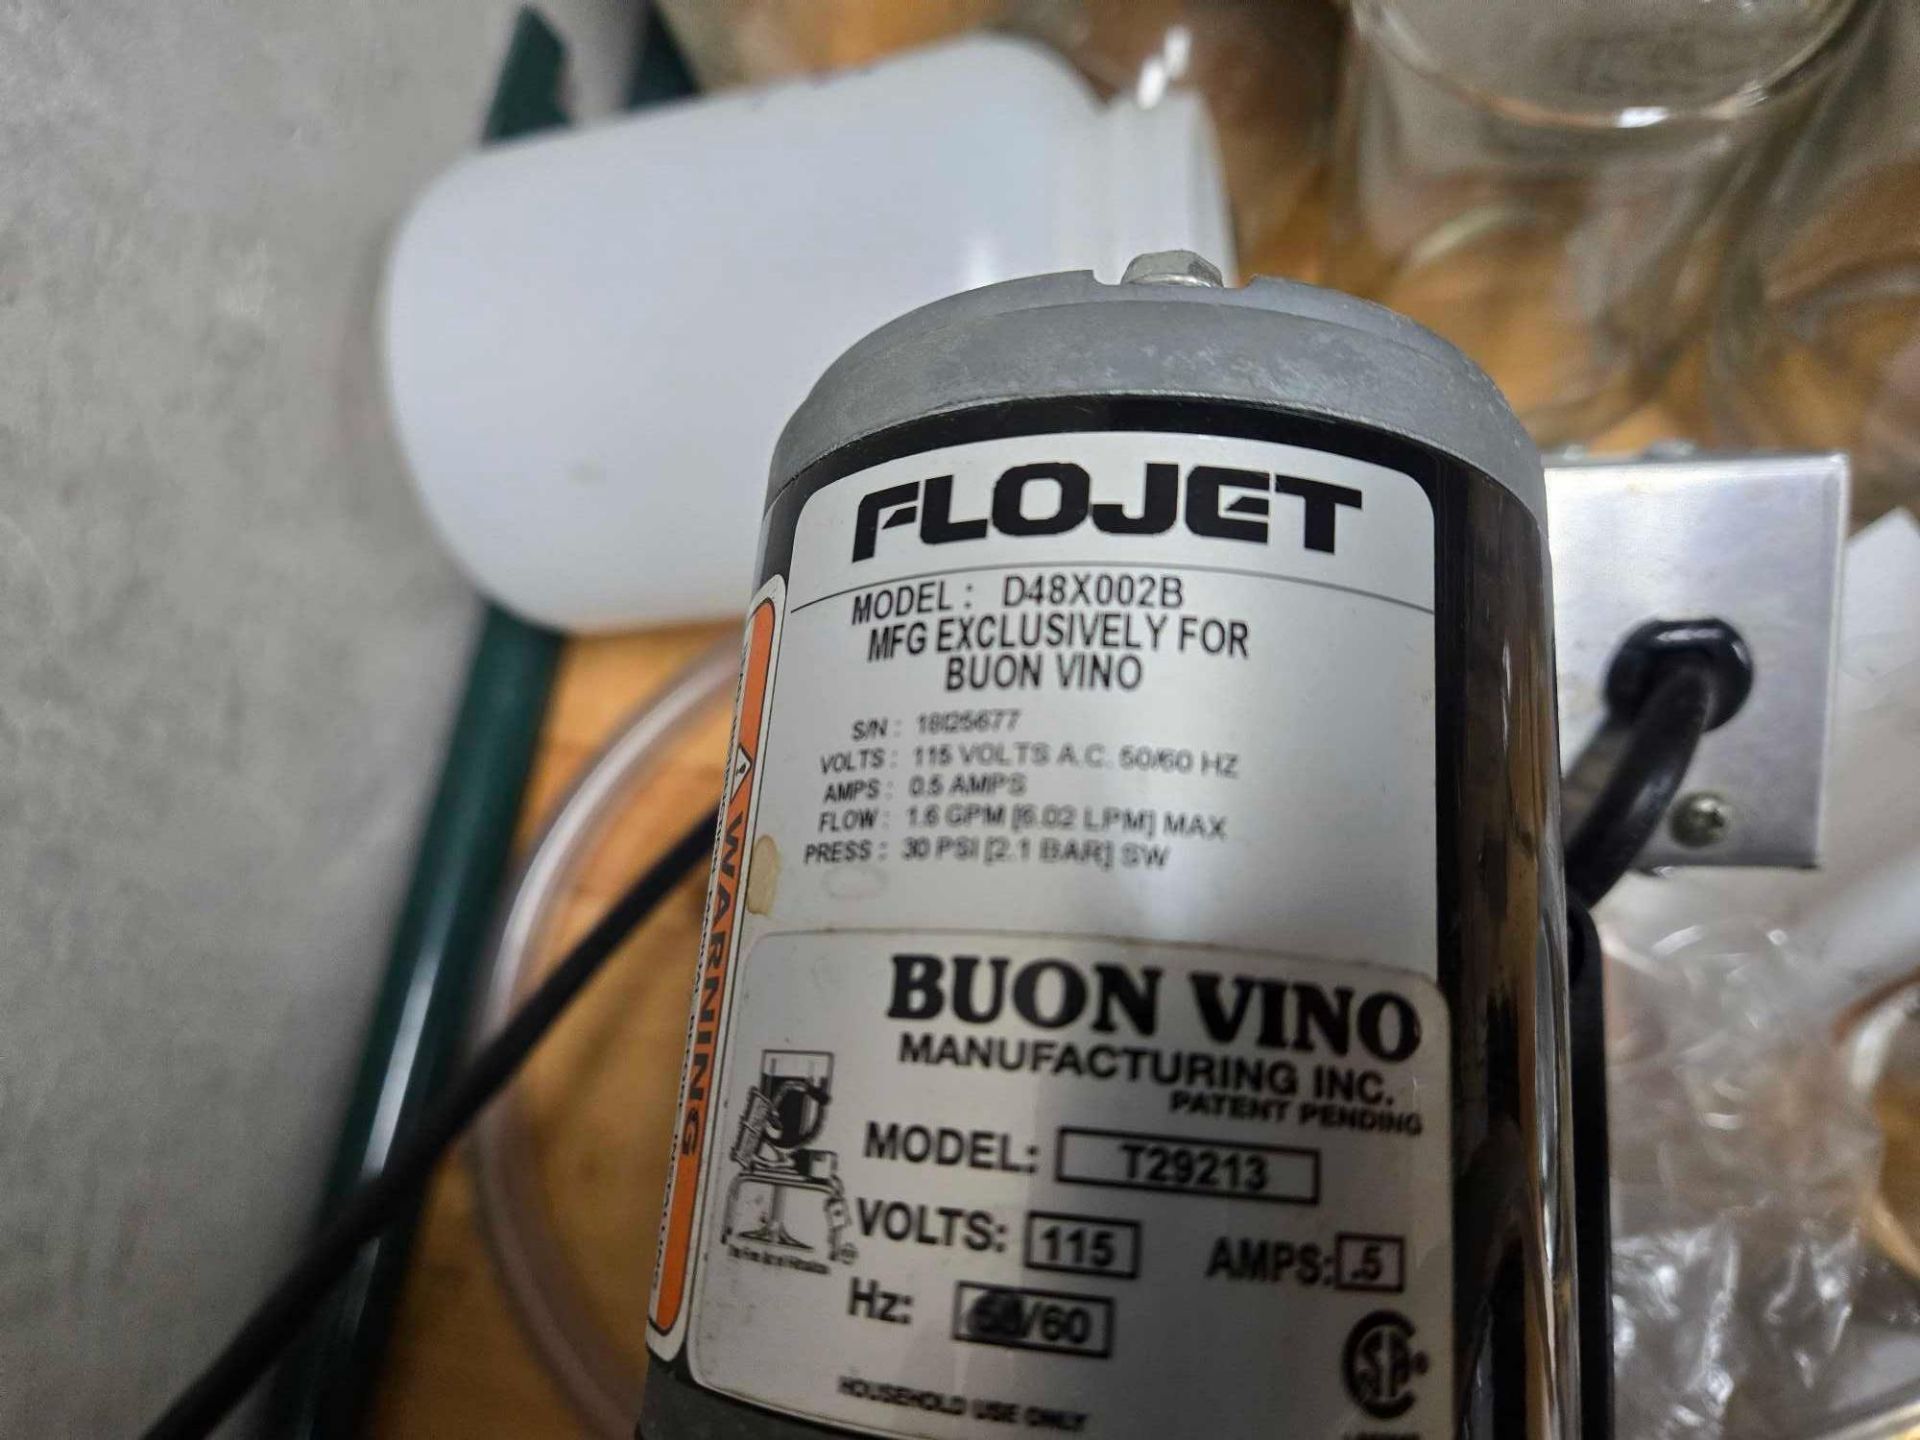 BON VINO SUPERJET ELECTRIC WINE FILTER PRESS, 1.6 GPM - Image 5 of 7